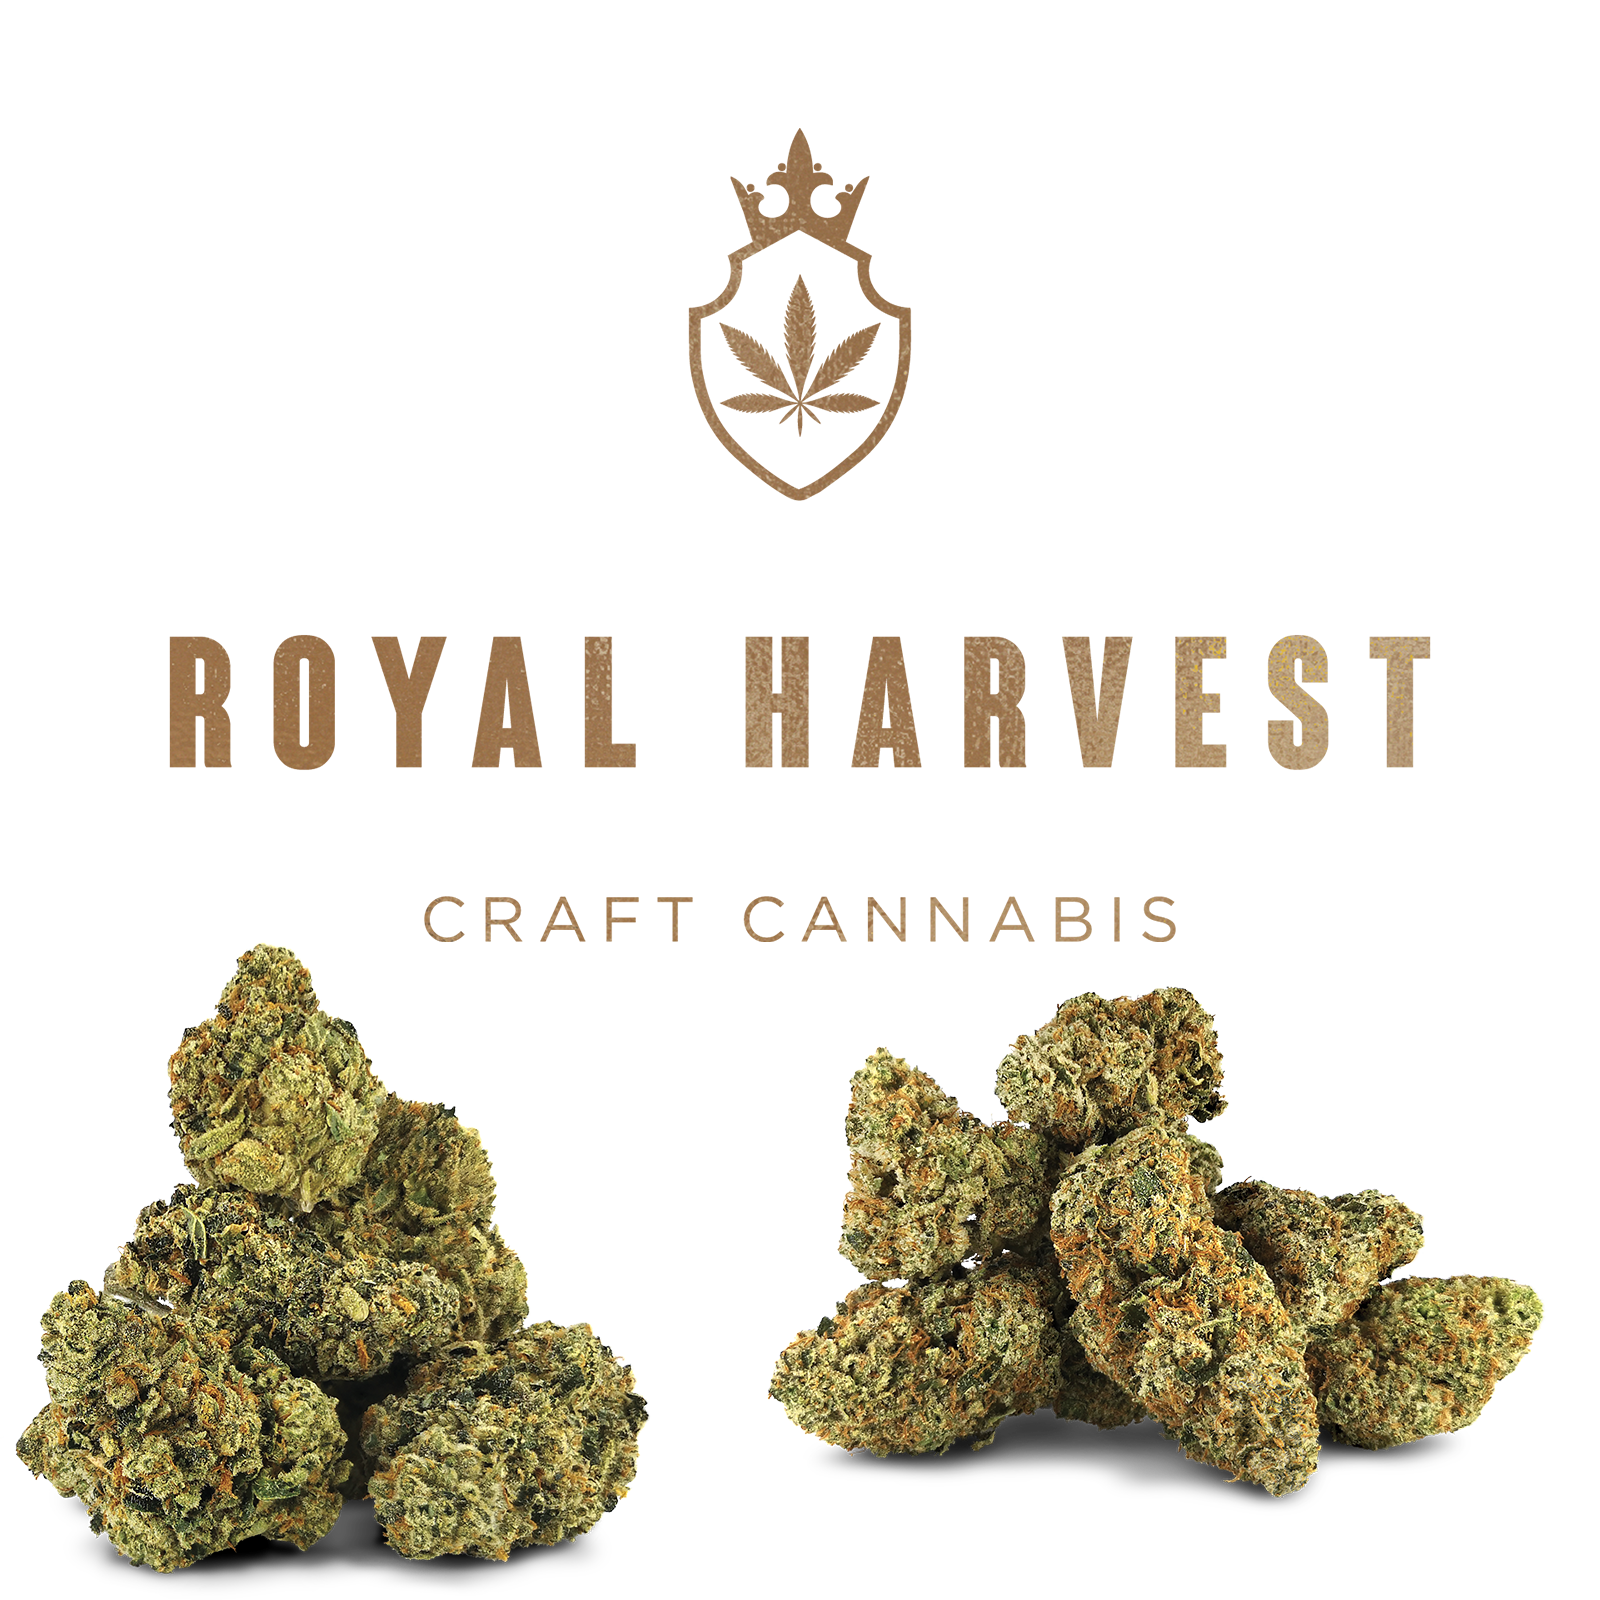 Award winning Royal Harvest Cannabis